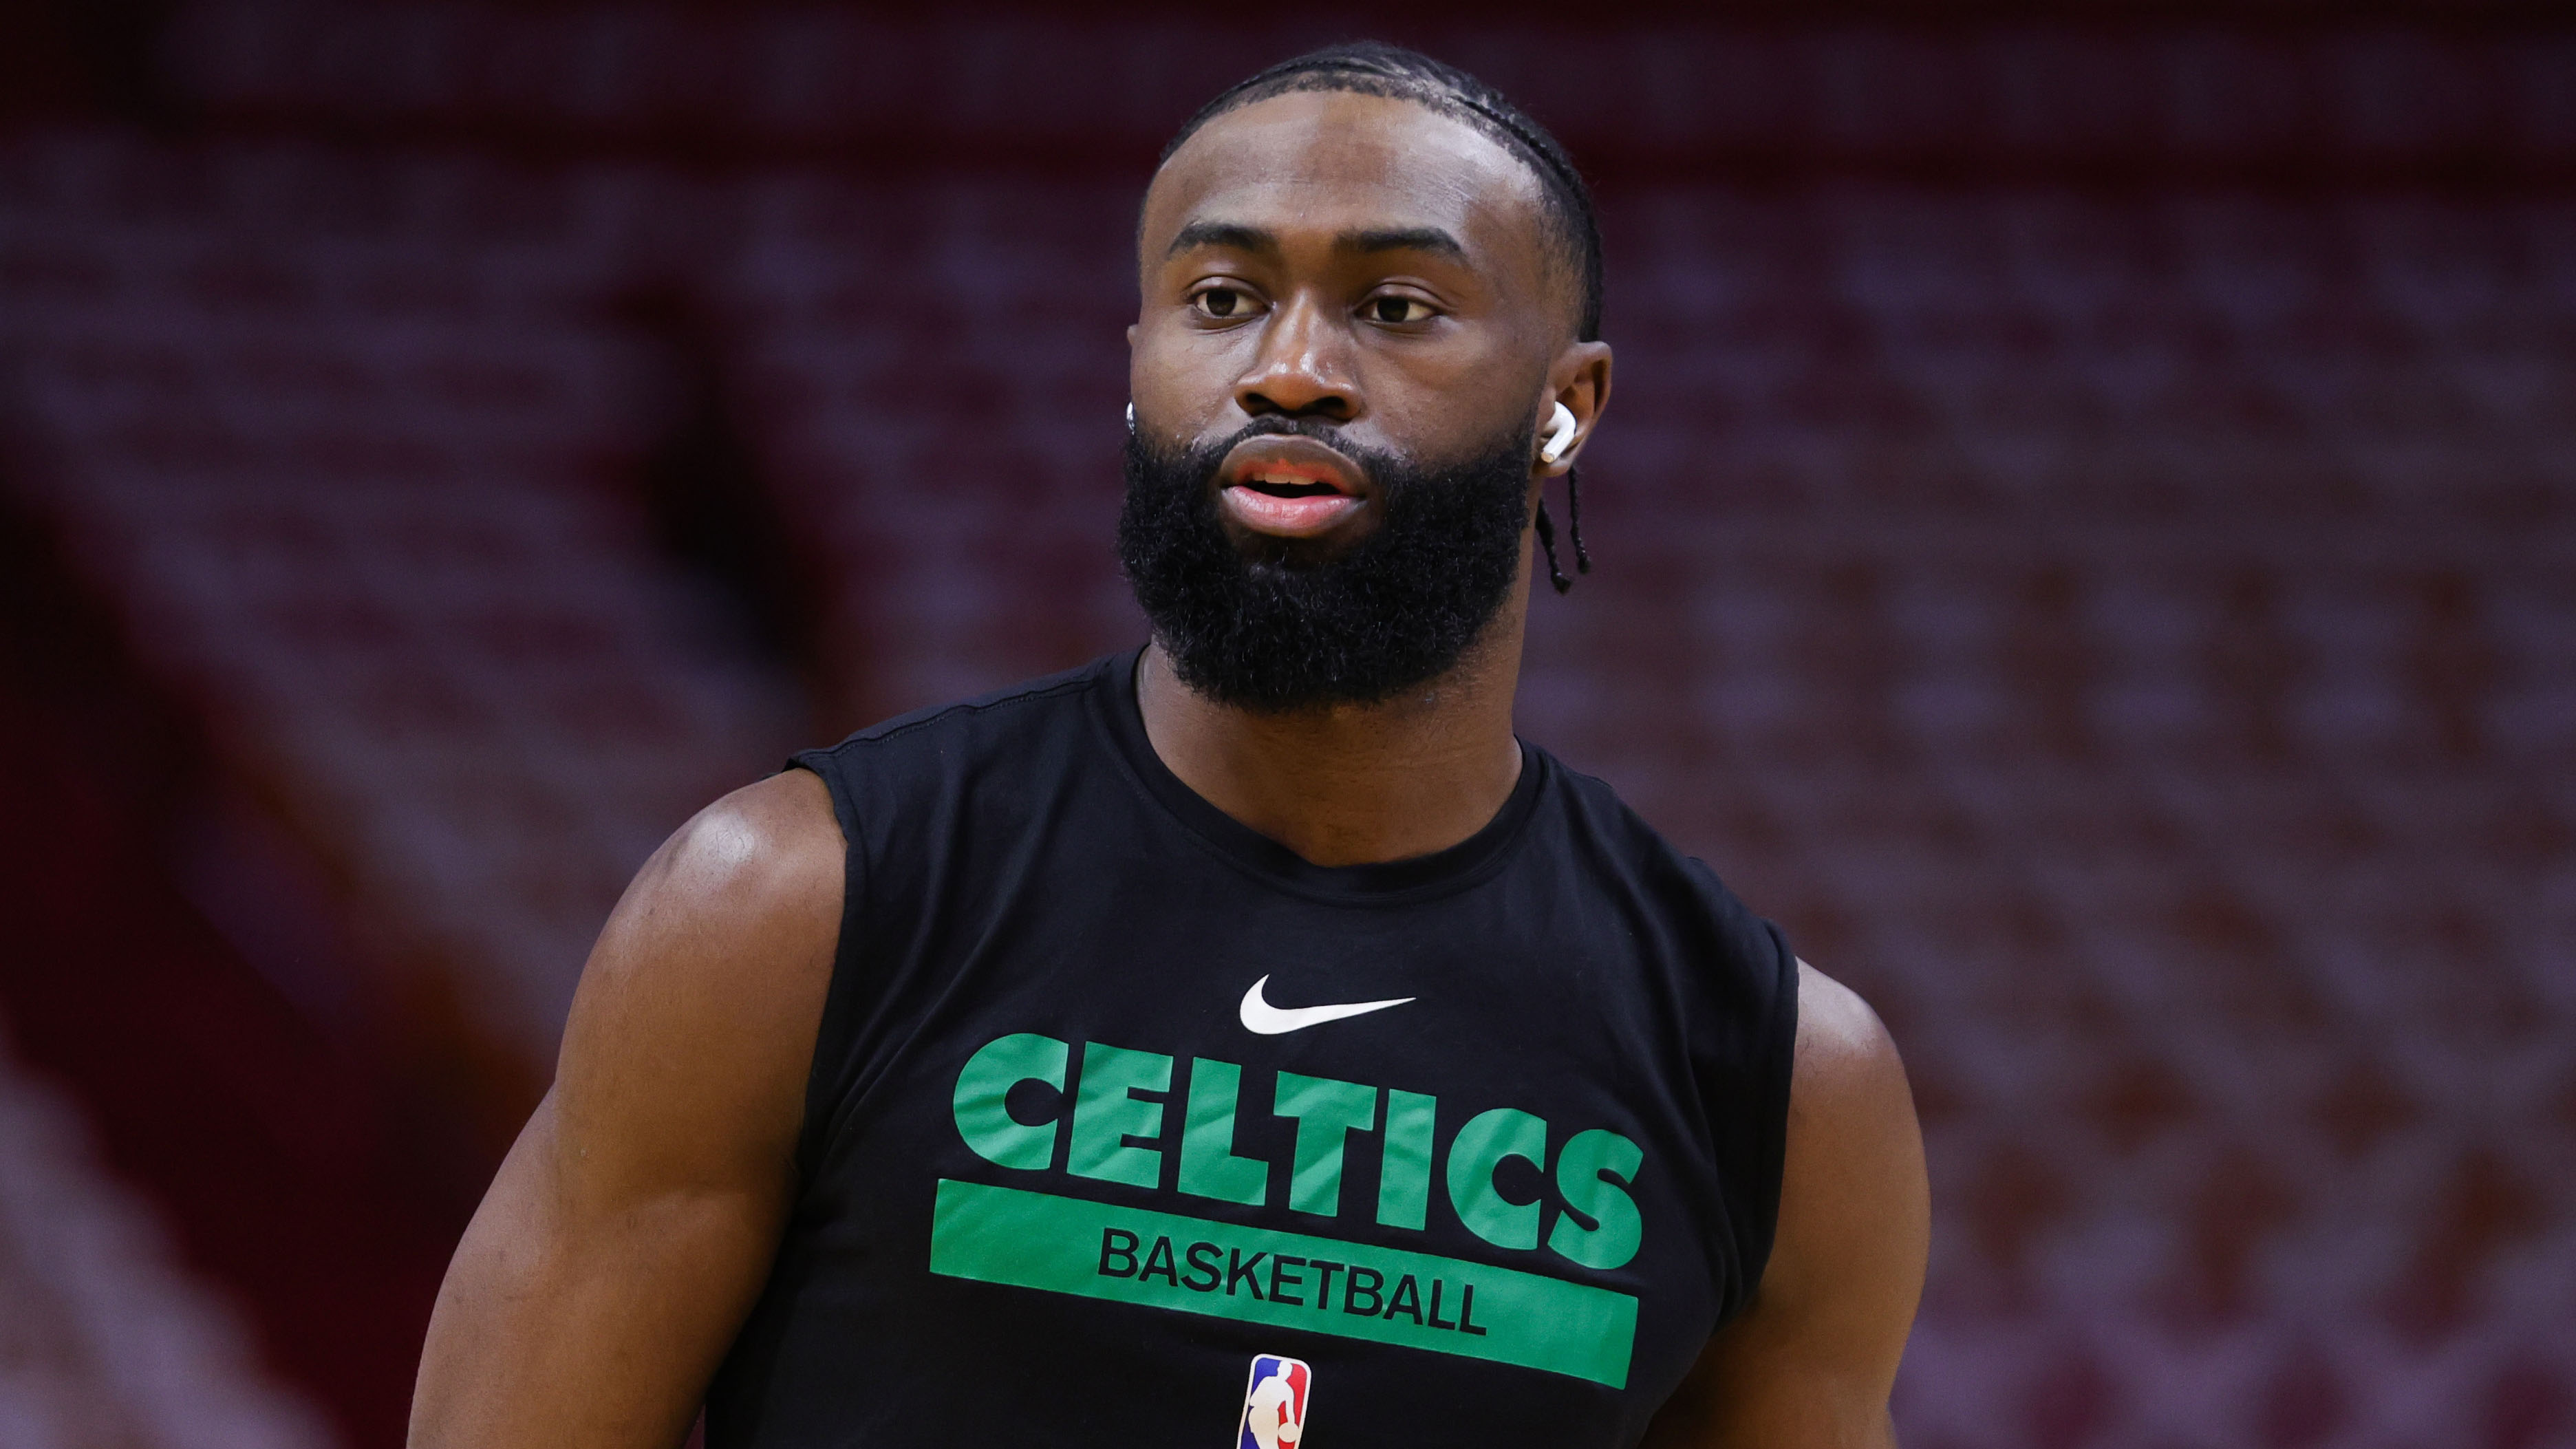 Jaylen Brown: Boston Celtics star makes All-Star debut after